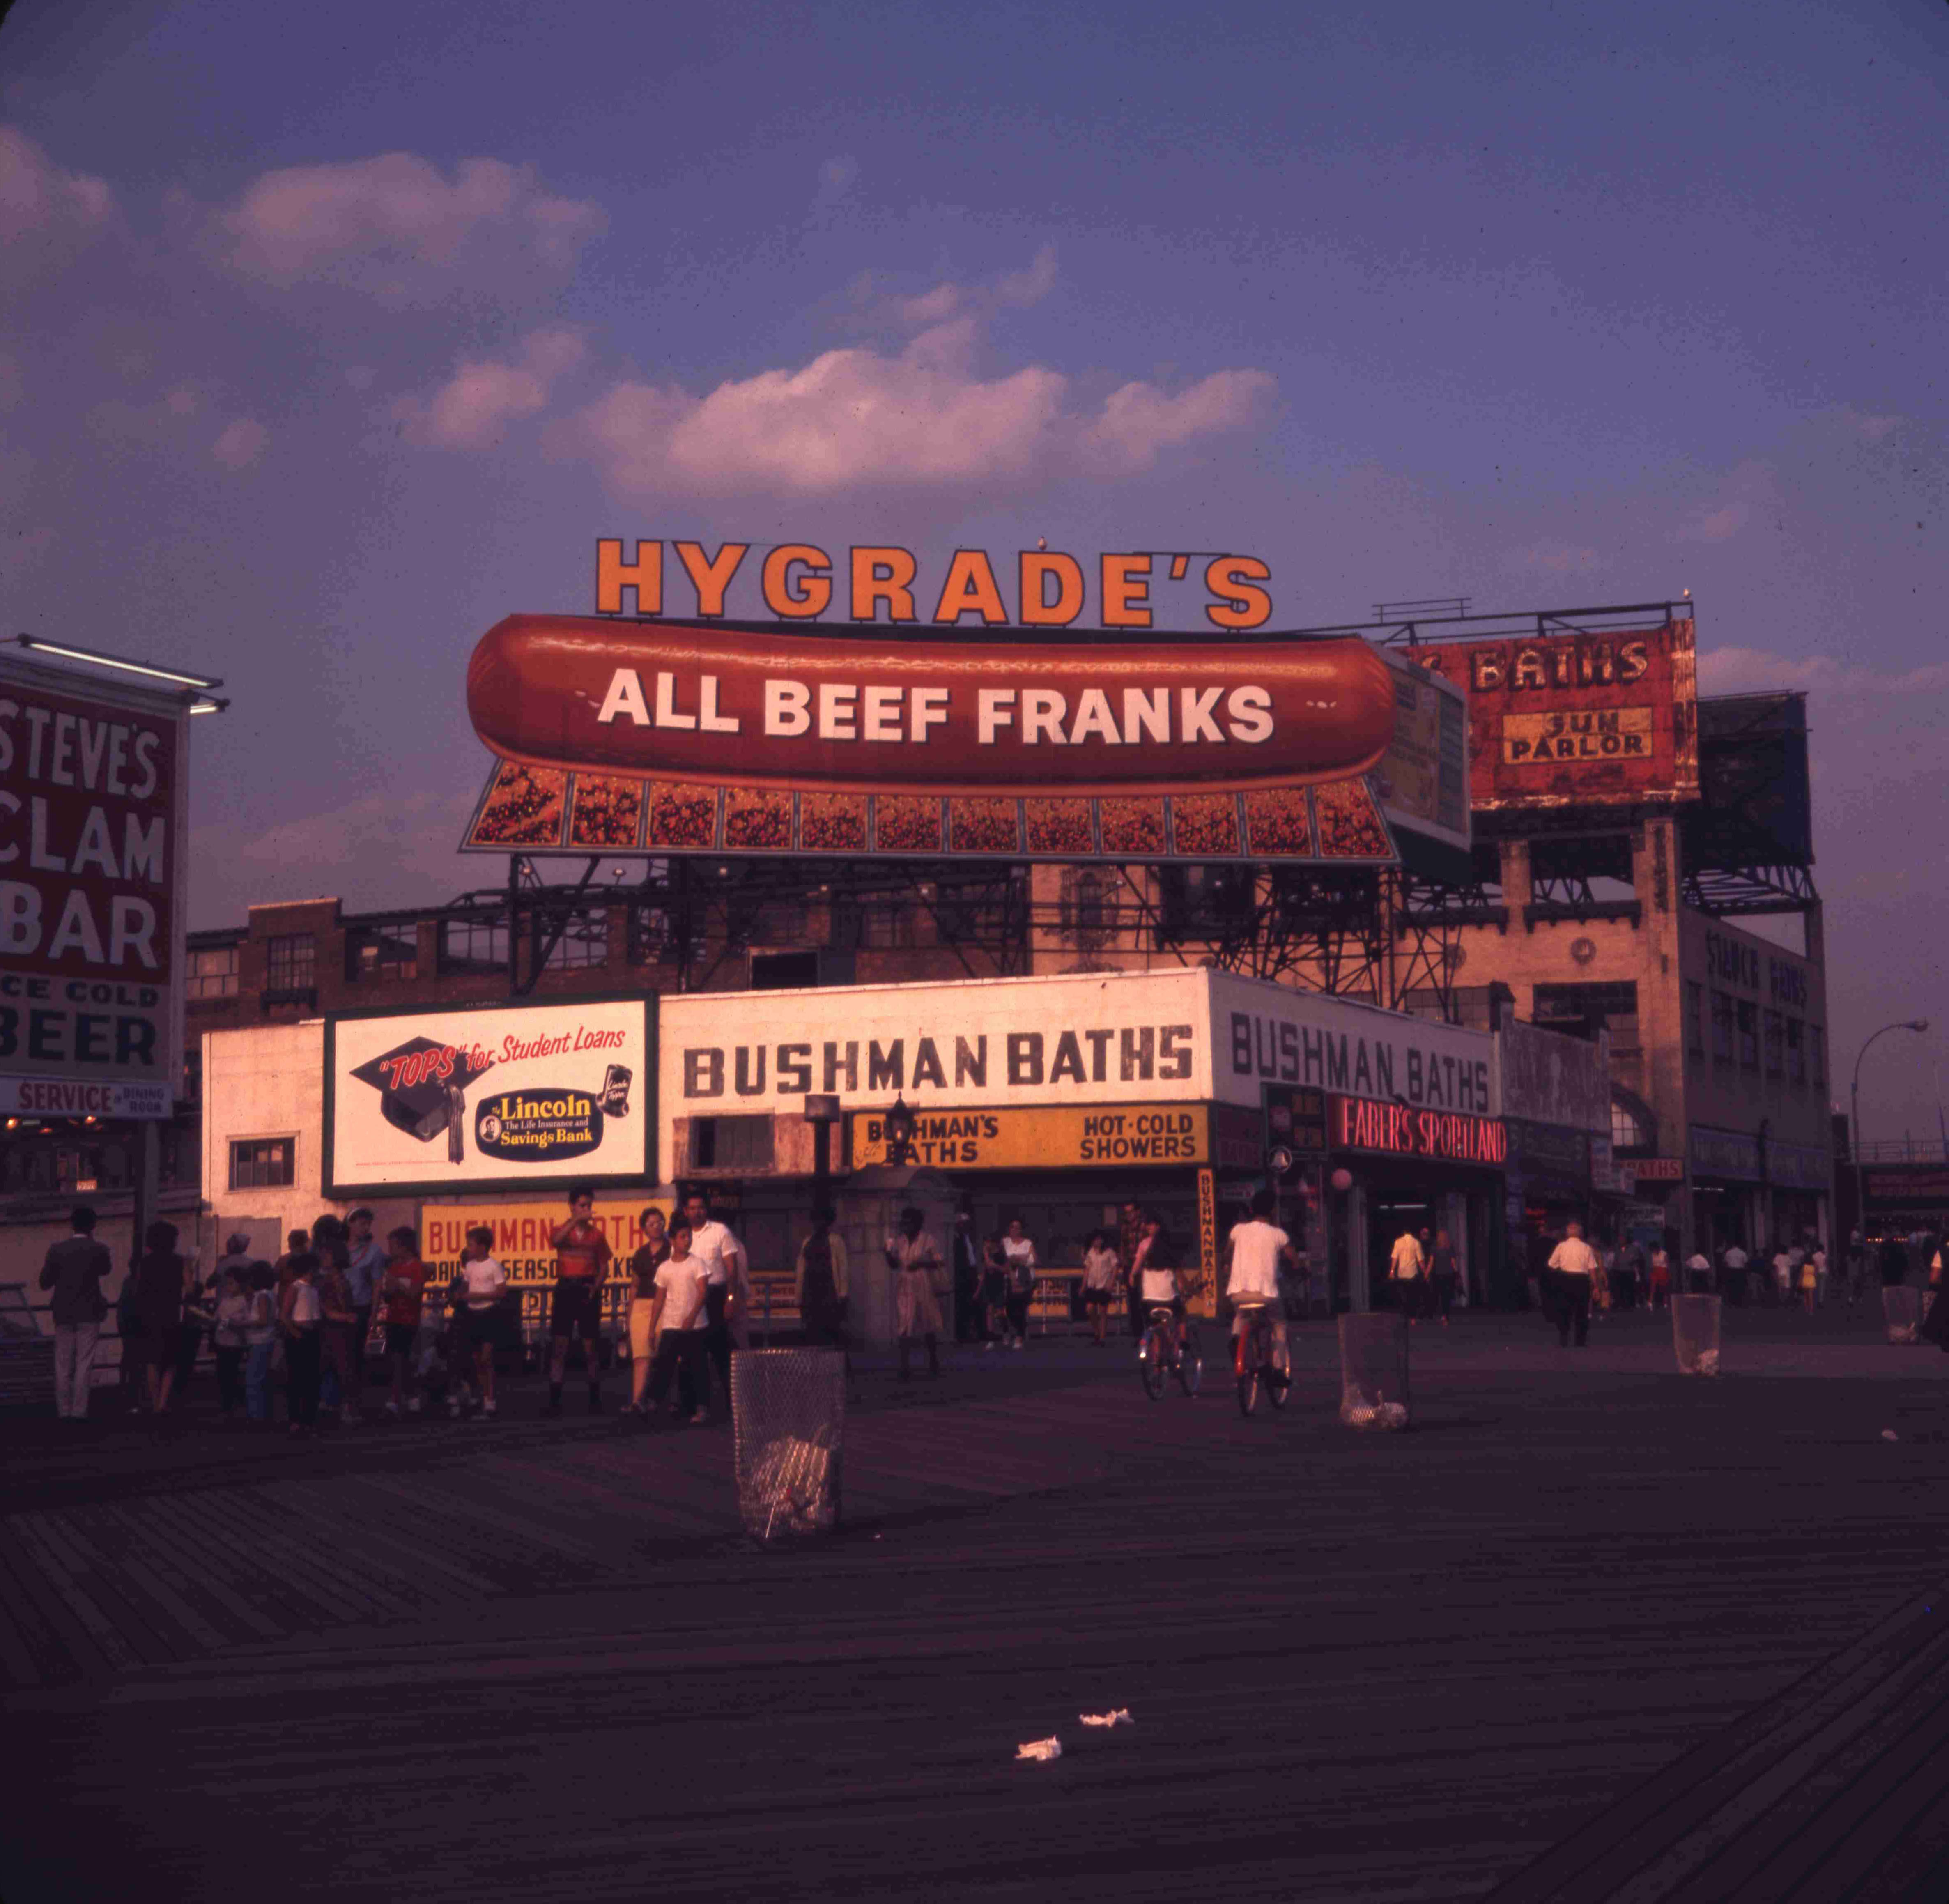 A modern hot dog stand on Coney Island